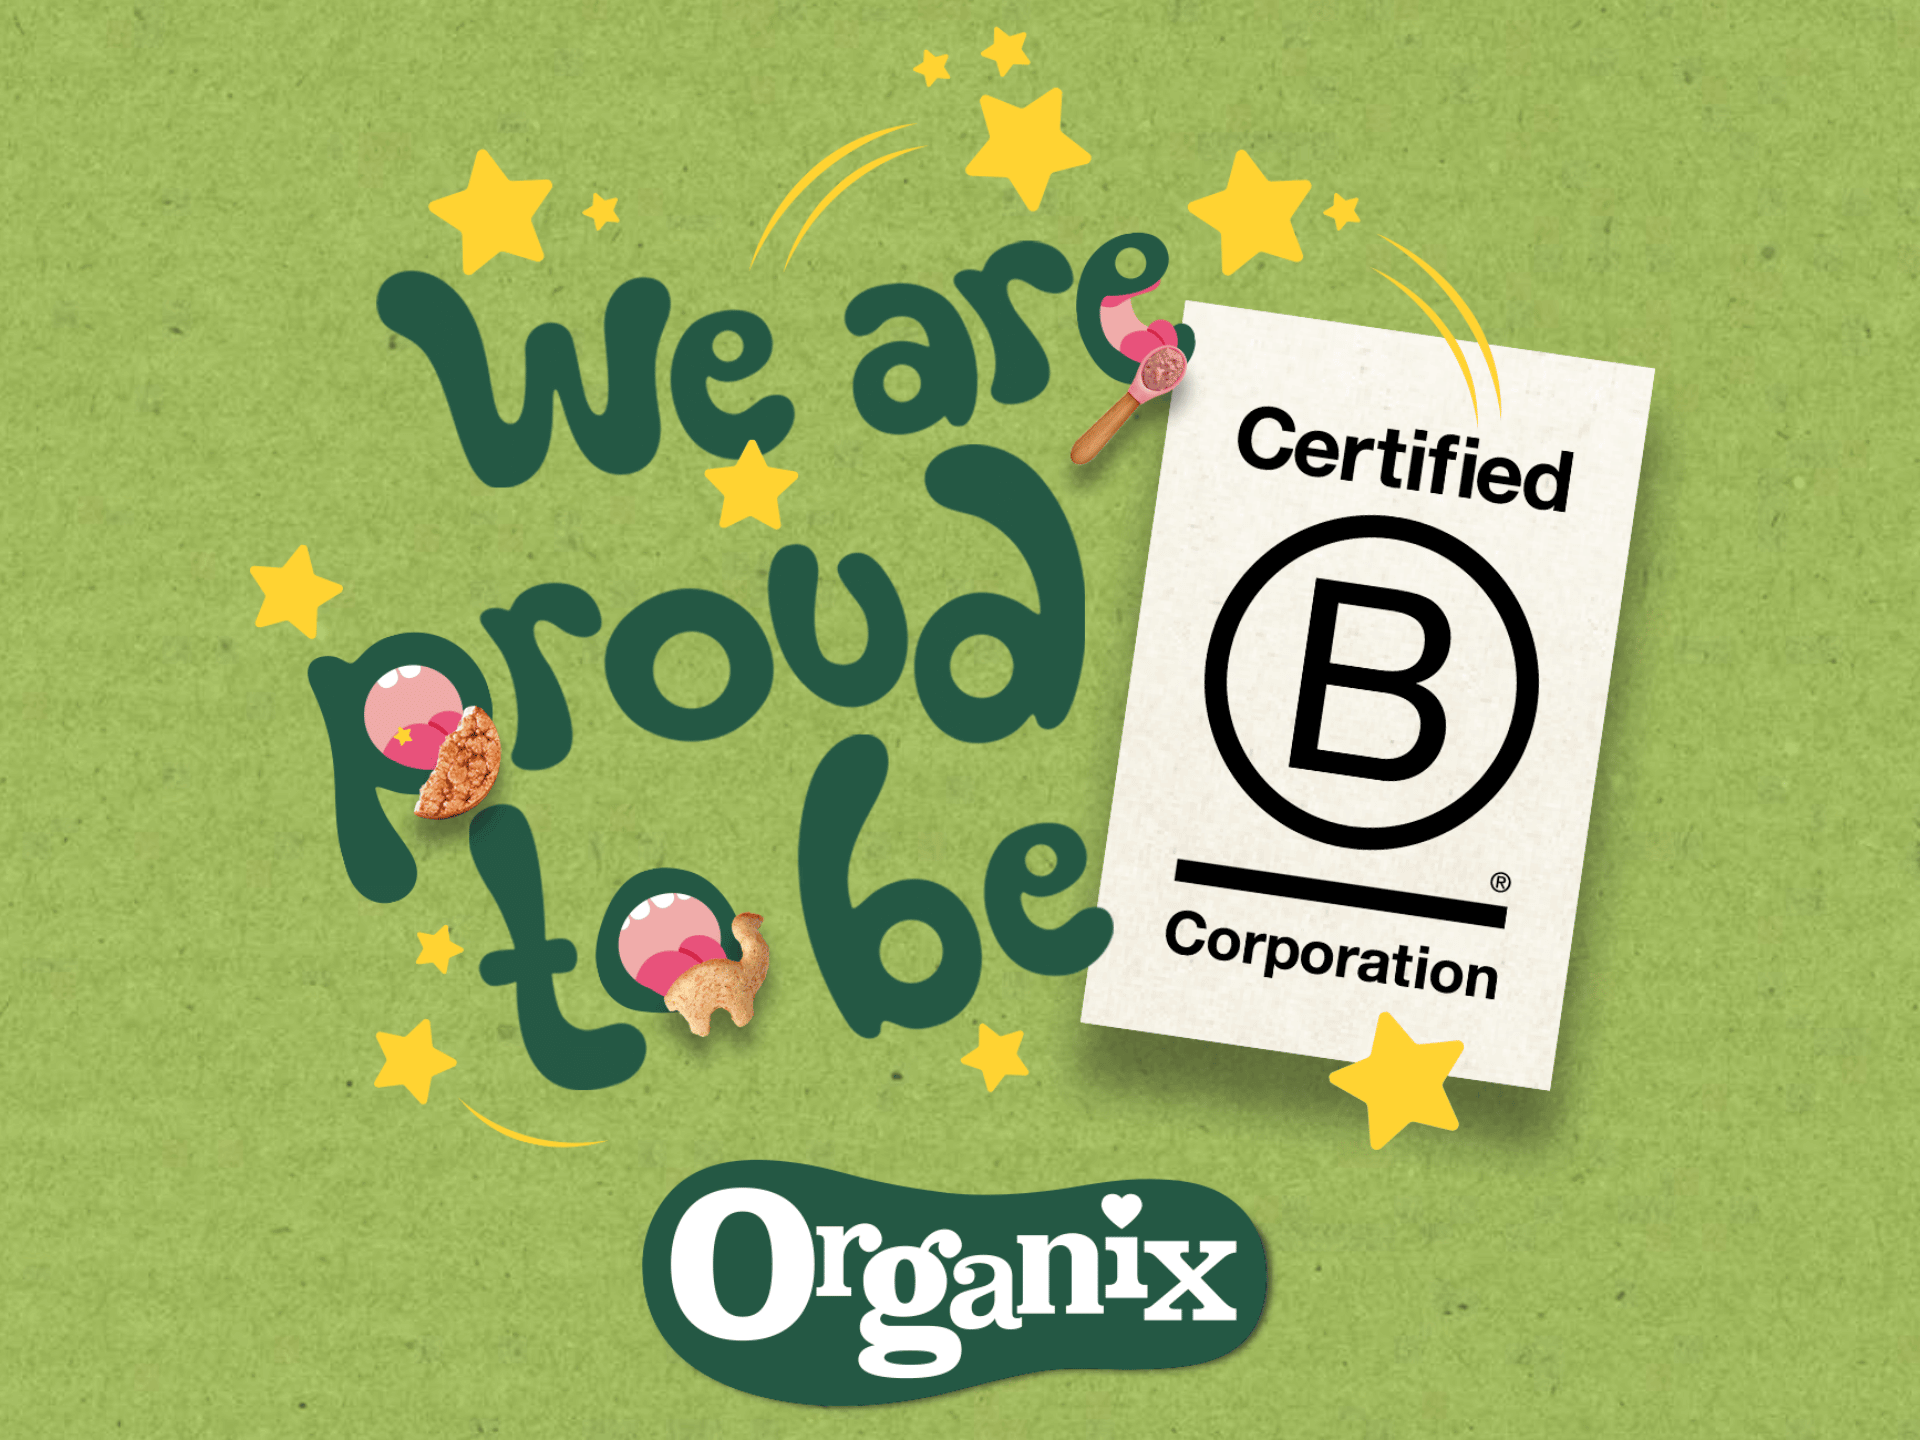 Certified B Corporation logo, Organix logo, and stars